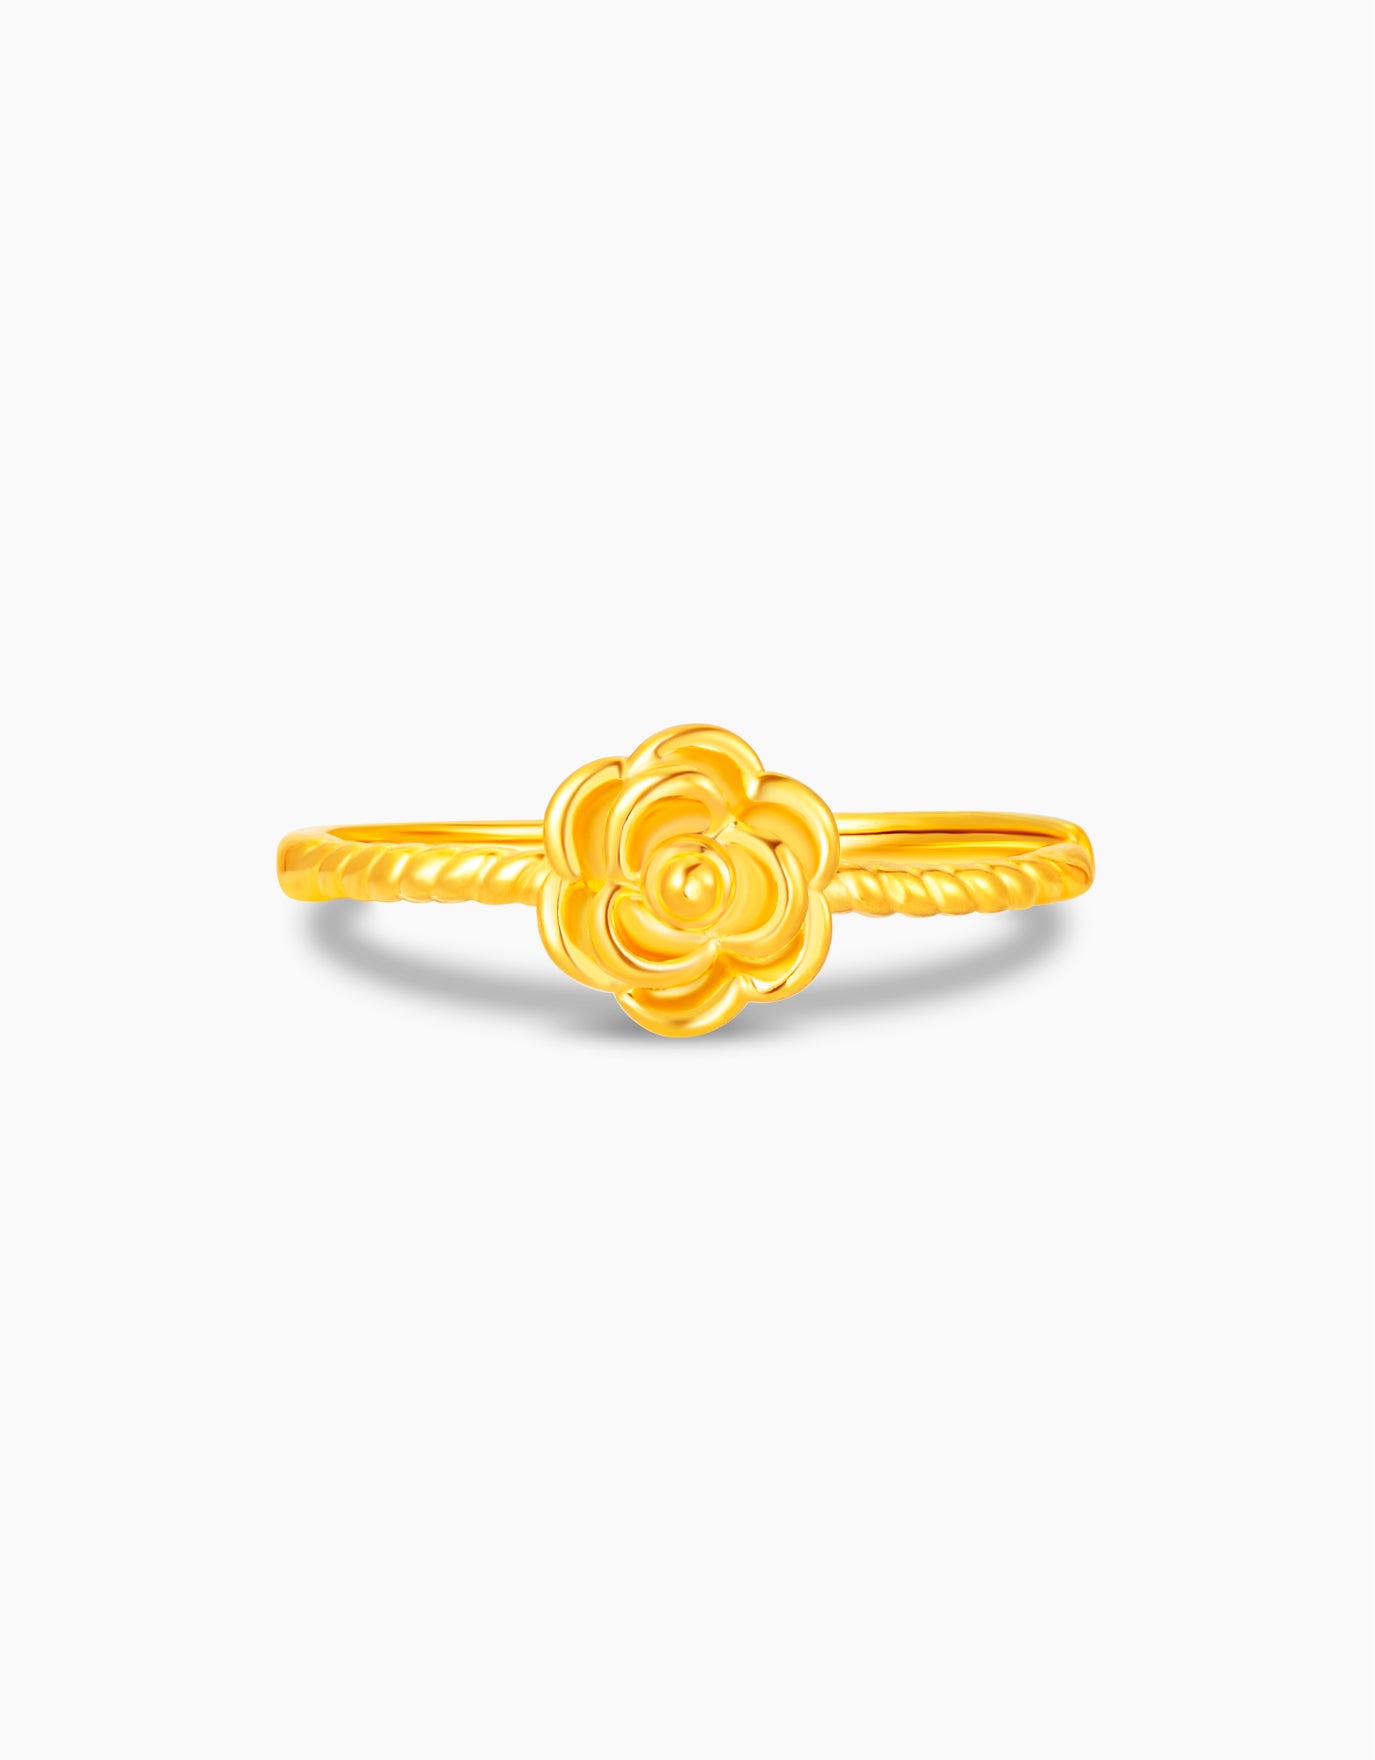 LVC 9IN Sunset Rose 999 Gold Ring